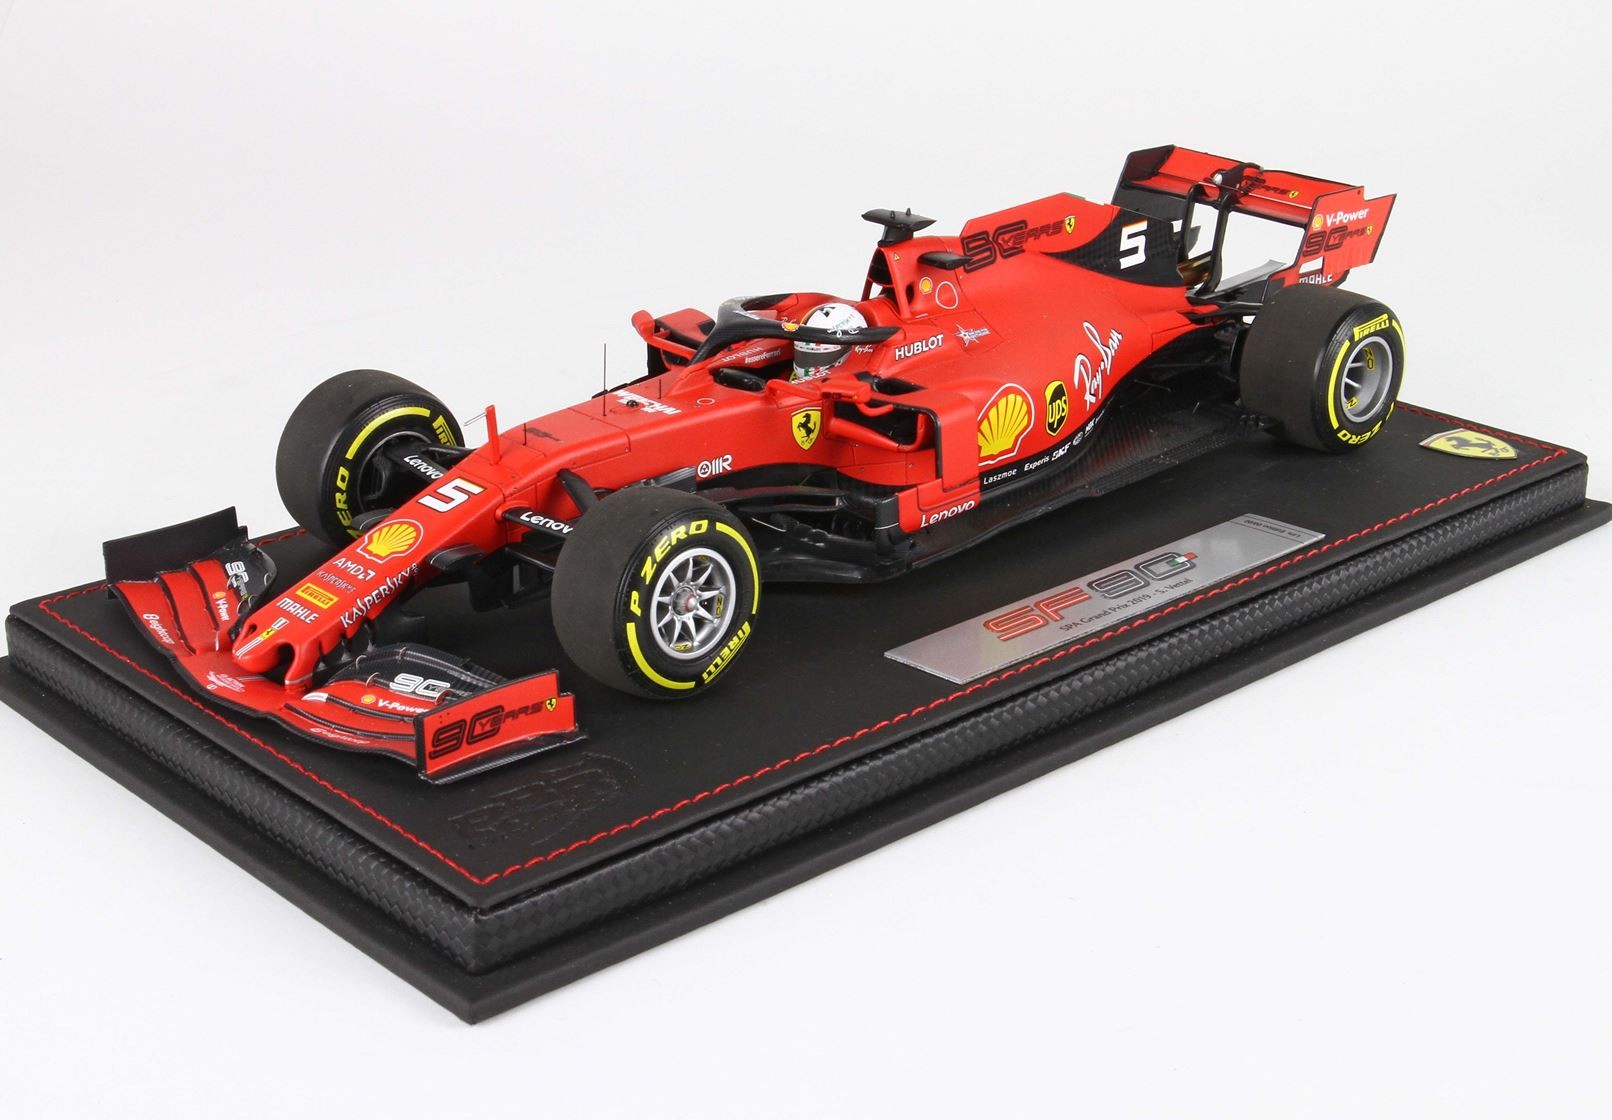 BBR - Ferrari SF90 Vettel #5, GP Belgium 2019: BBR191825ST